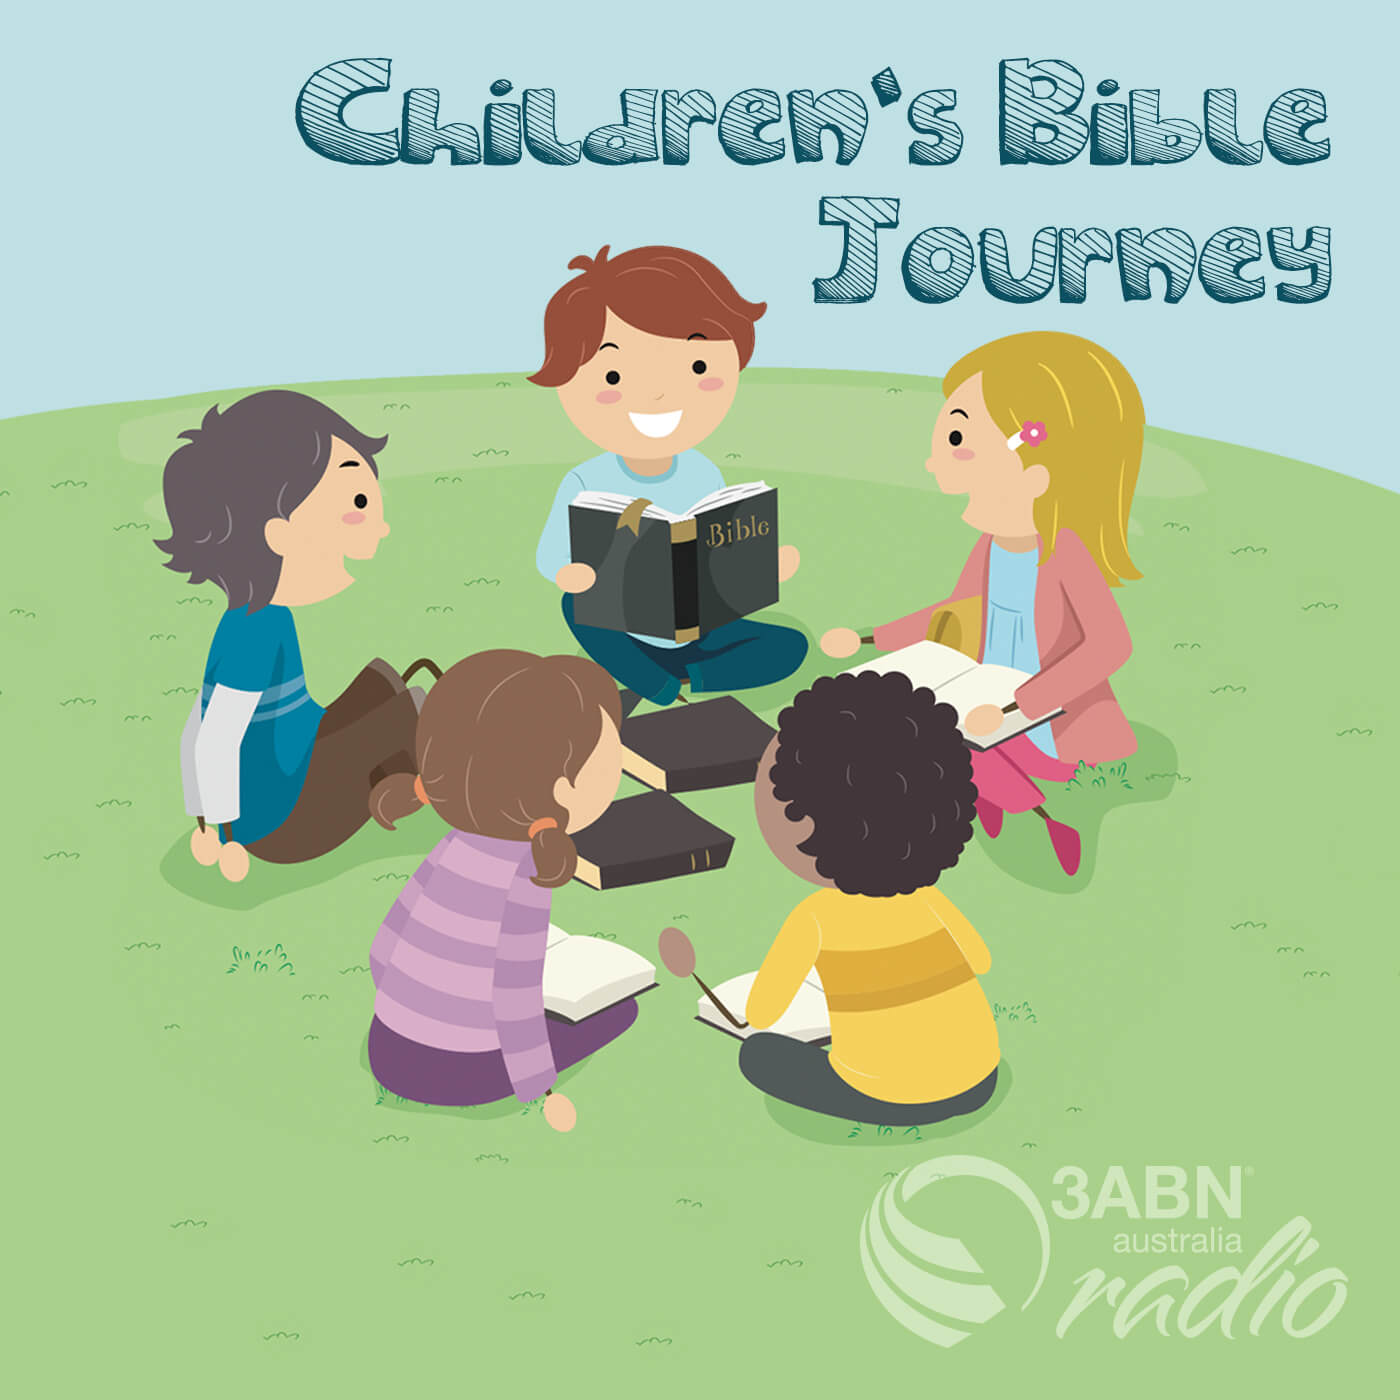 Children's Bible Journey - 2183